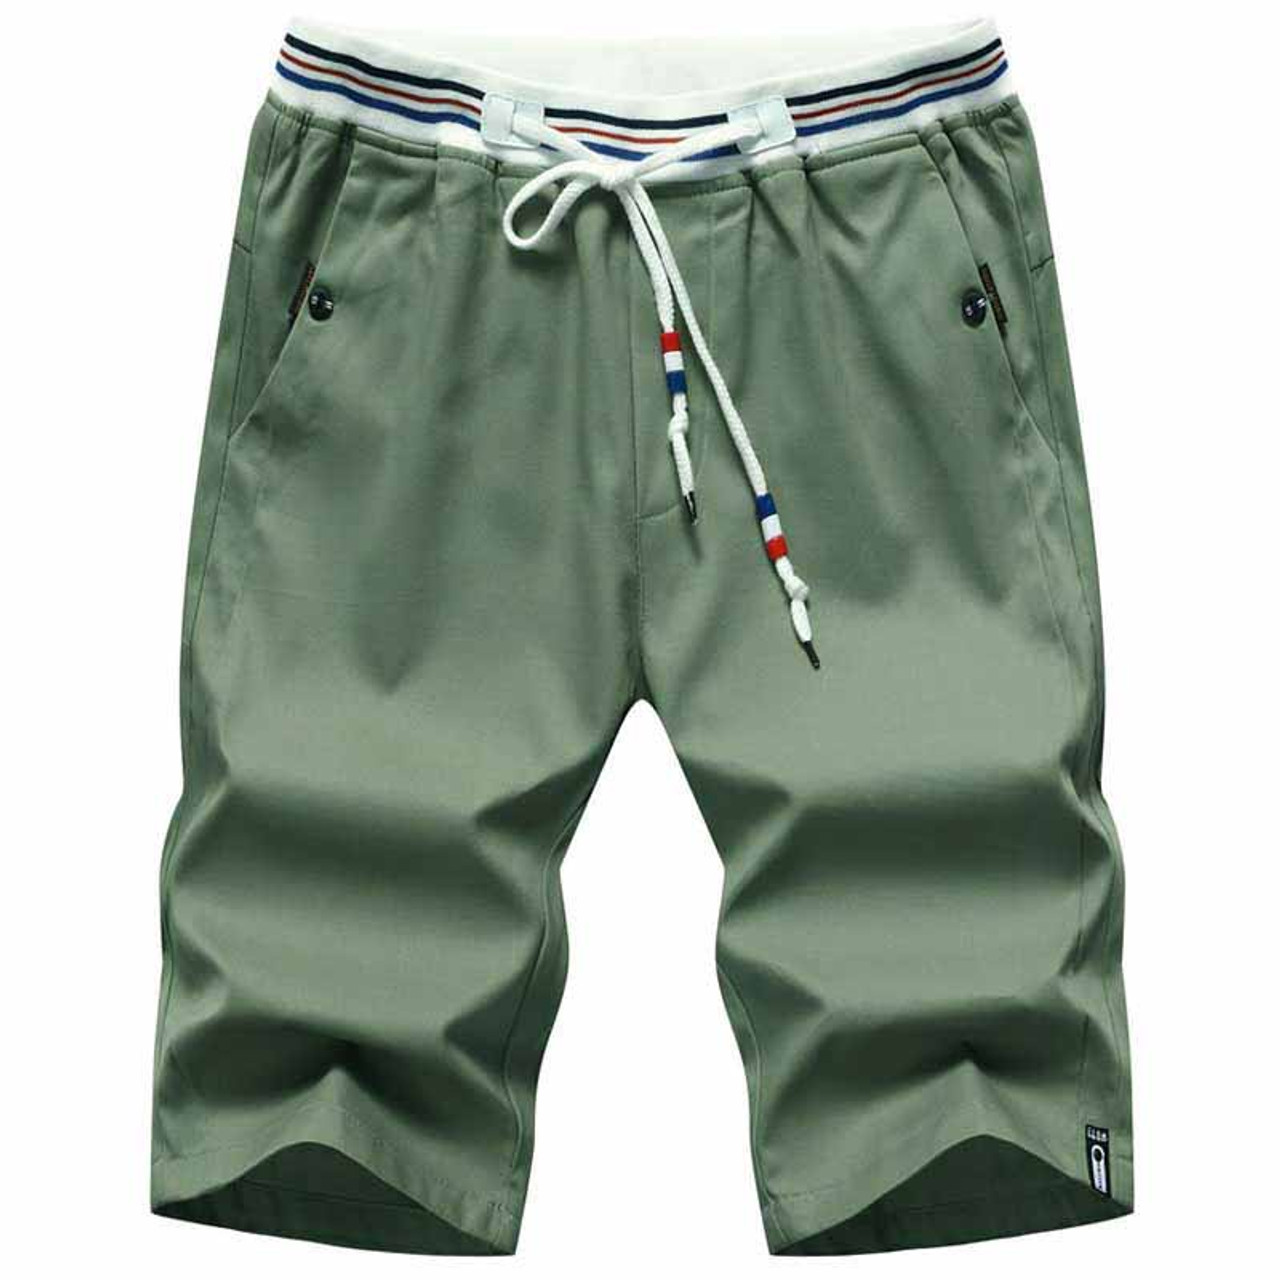 Green short casual label print stretch waist | Mens shorts online 1008MP